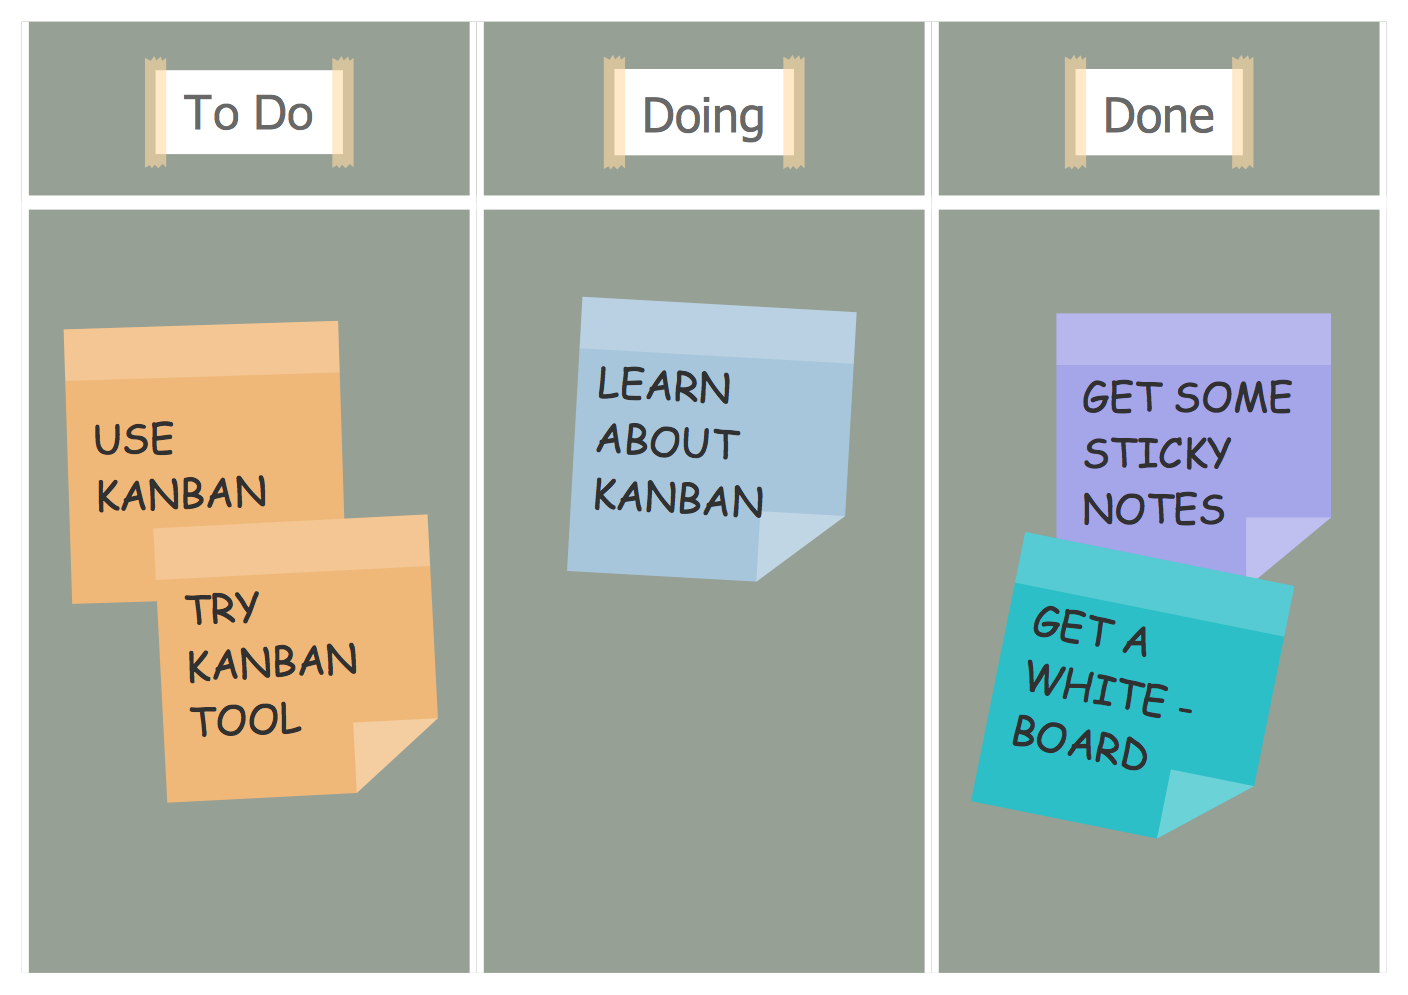 Scrum Board Suggesting to Use Kanban